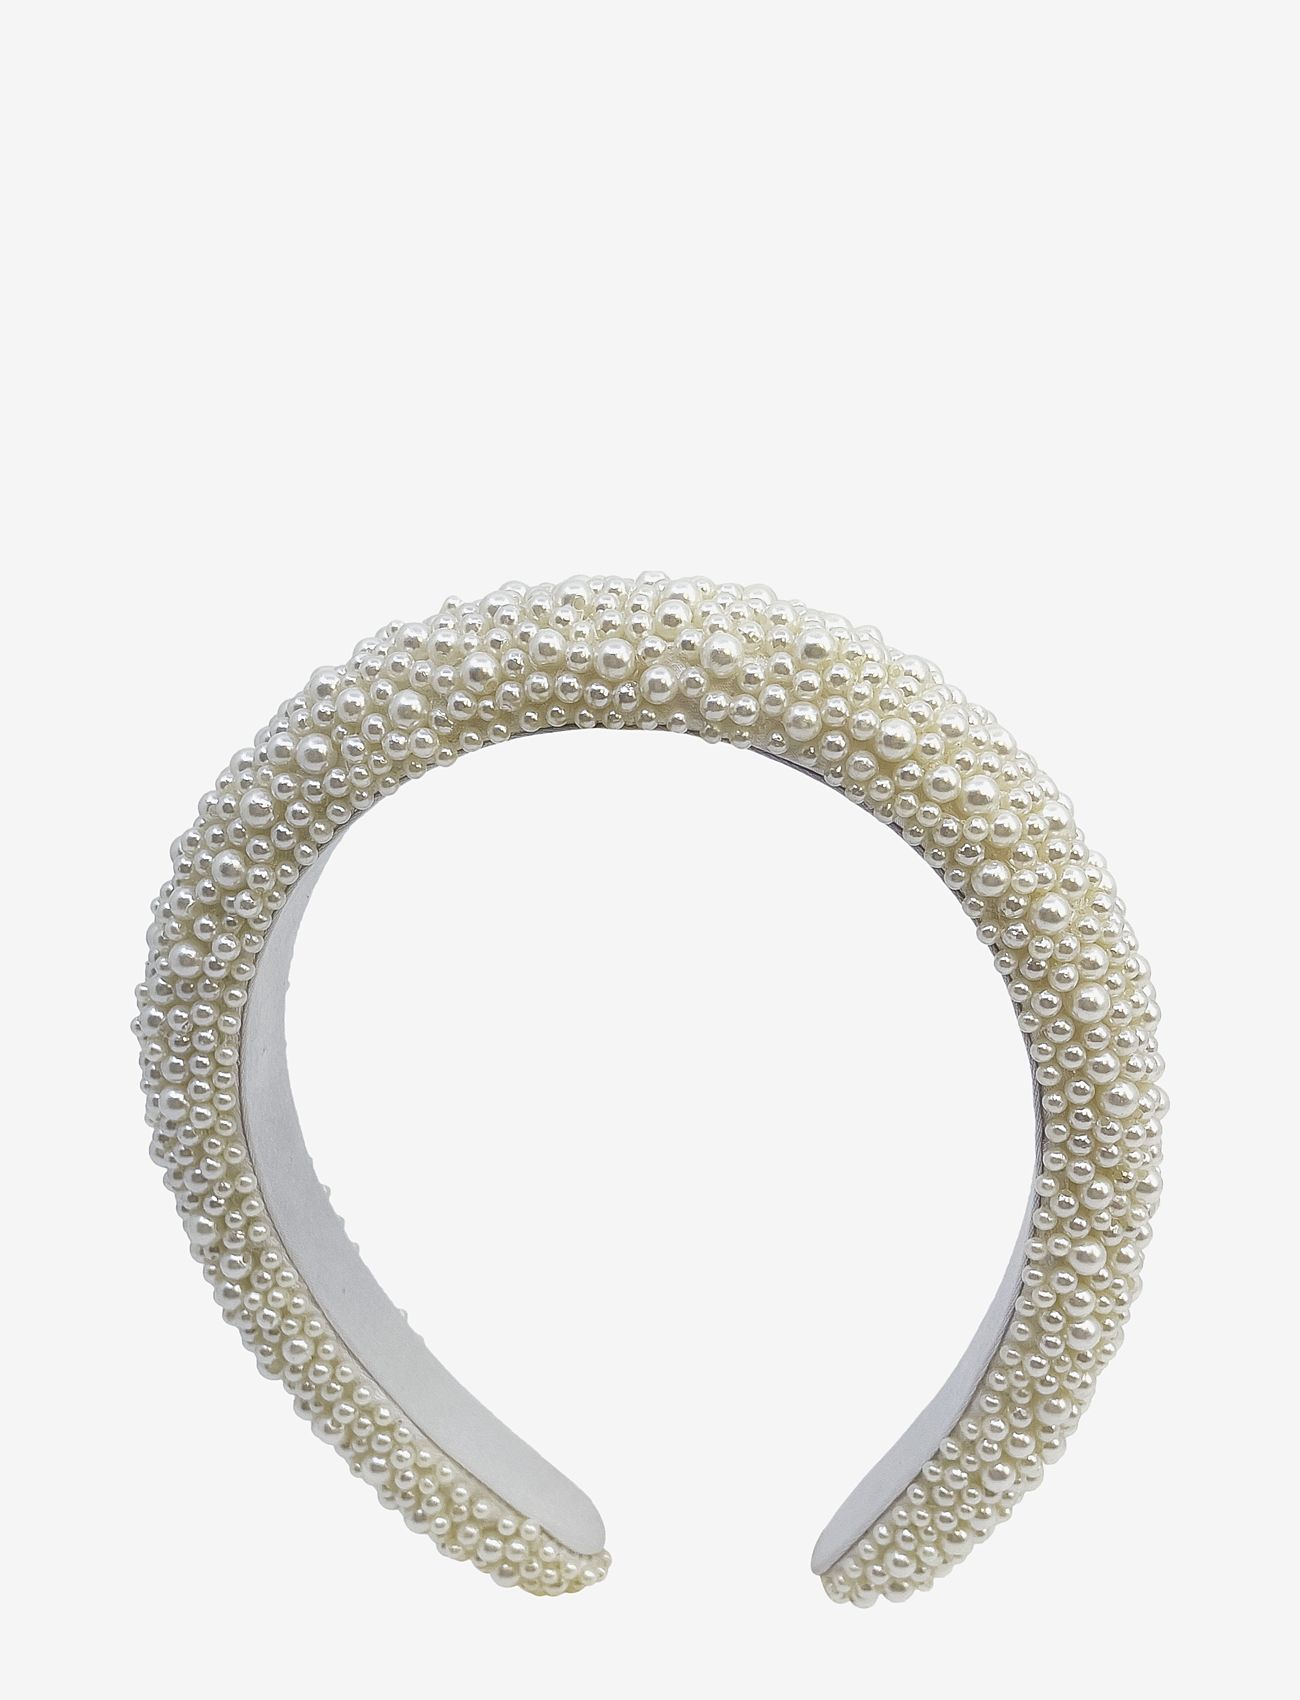 PIPOL'S BAZAAR Coco Beaded Headband White - Hair accessories 